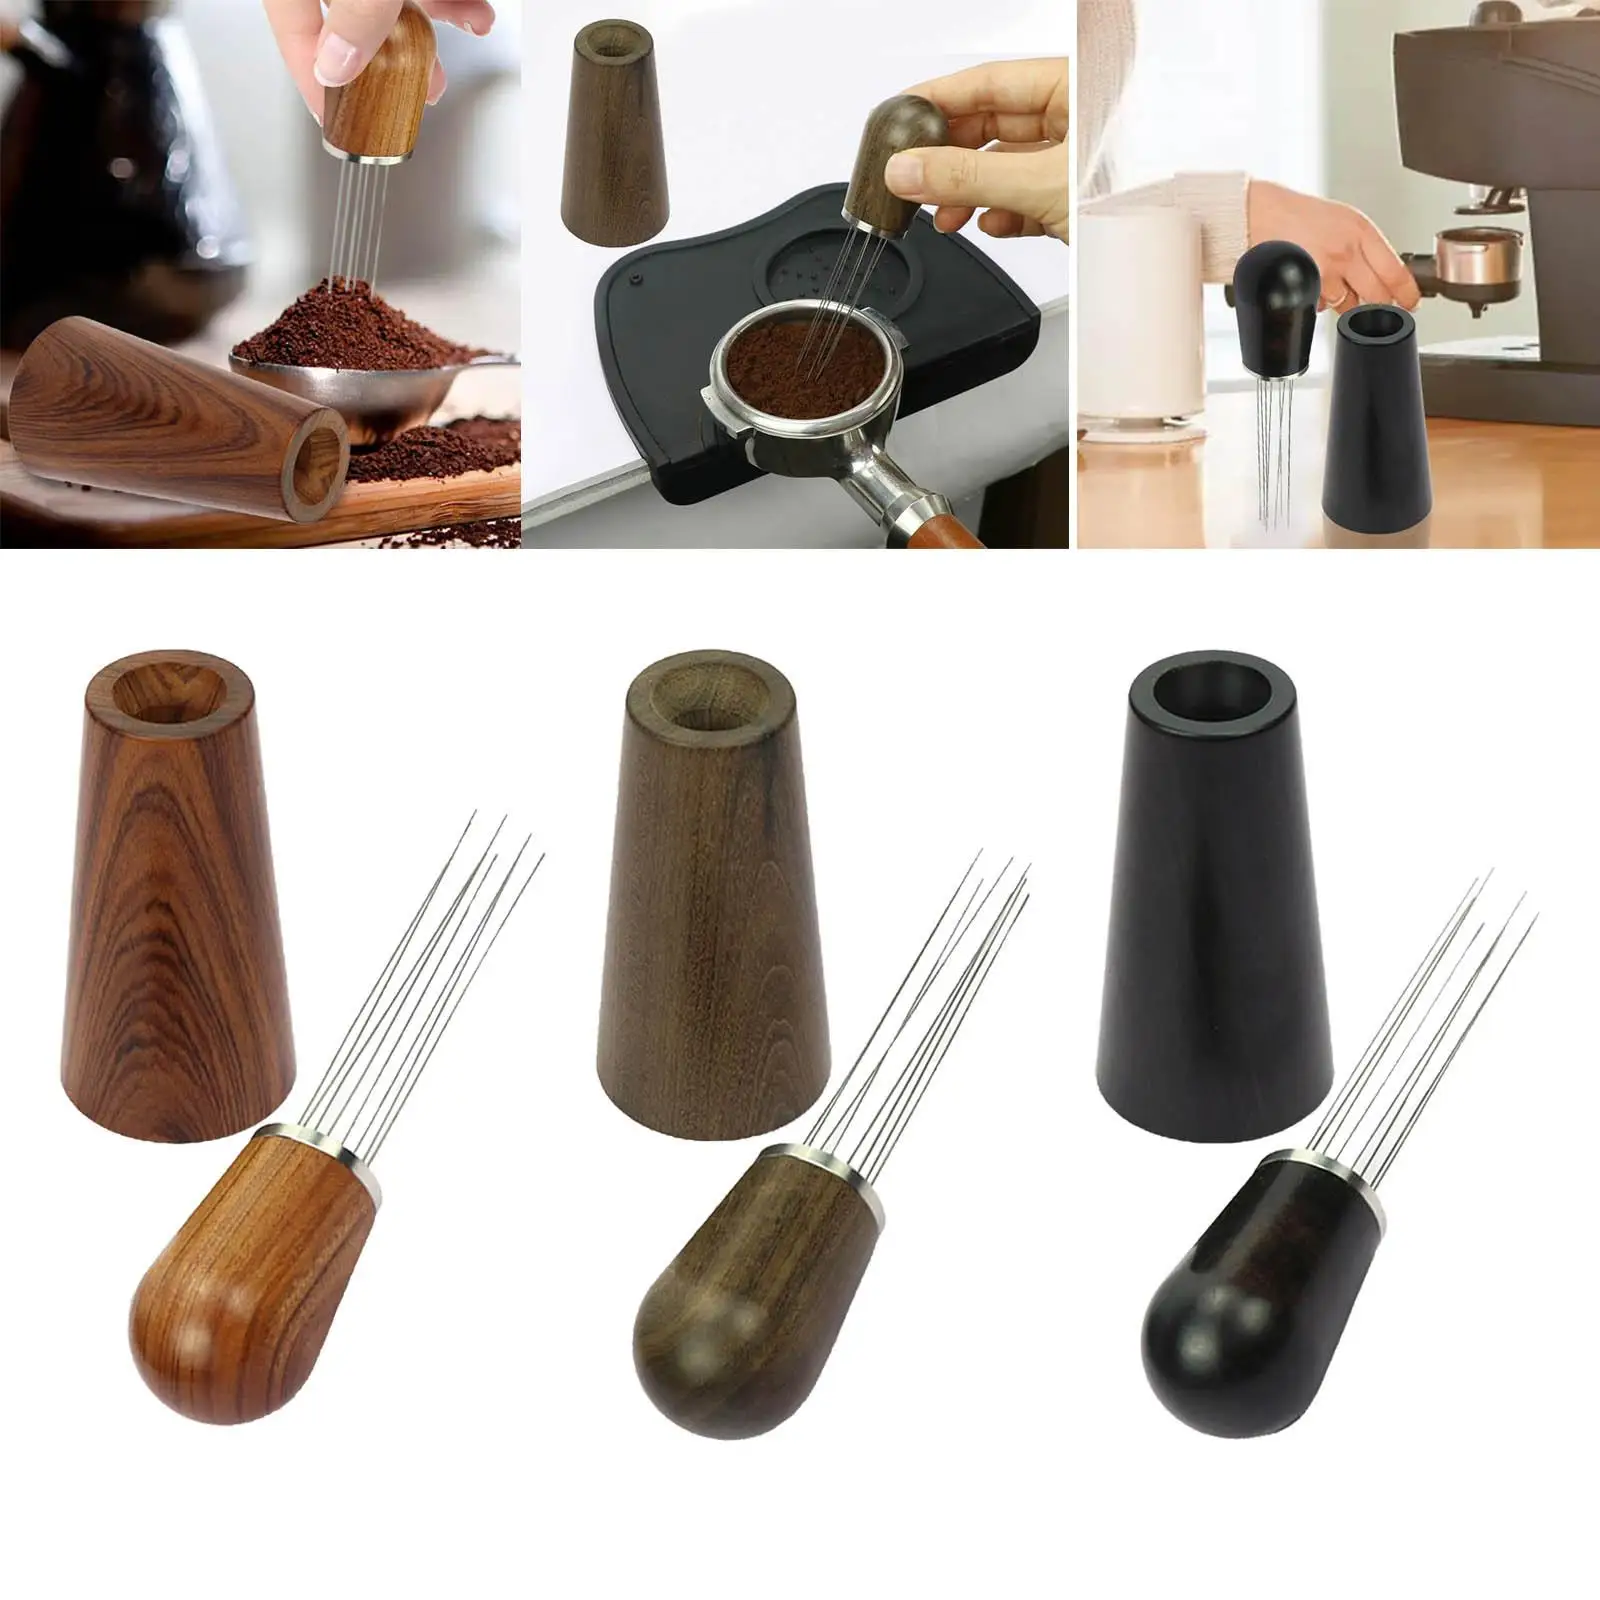 Needle Coffee Tamper Distributor, Wood Handle Coffee Stirrer with Stand Barista Espresso Distribution Tool